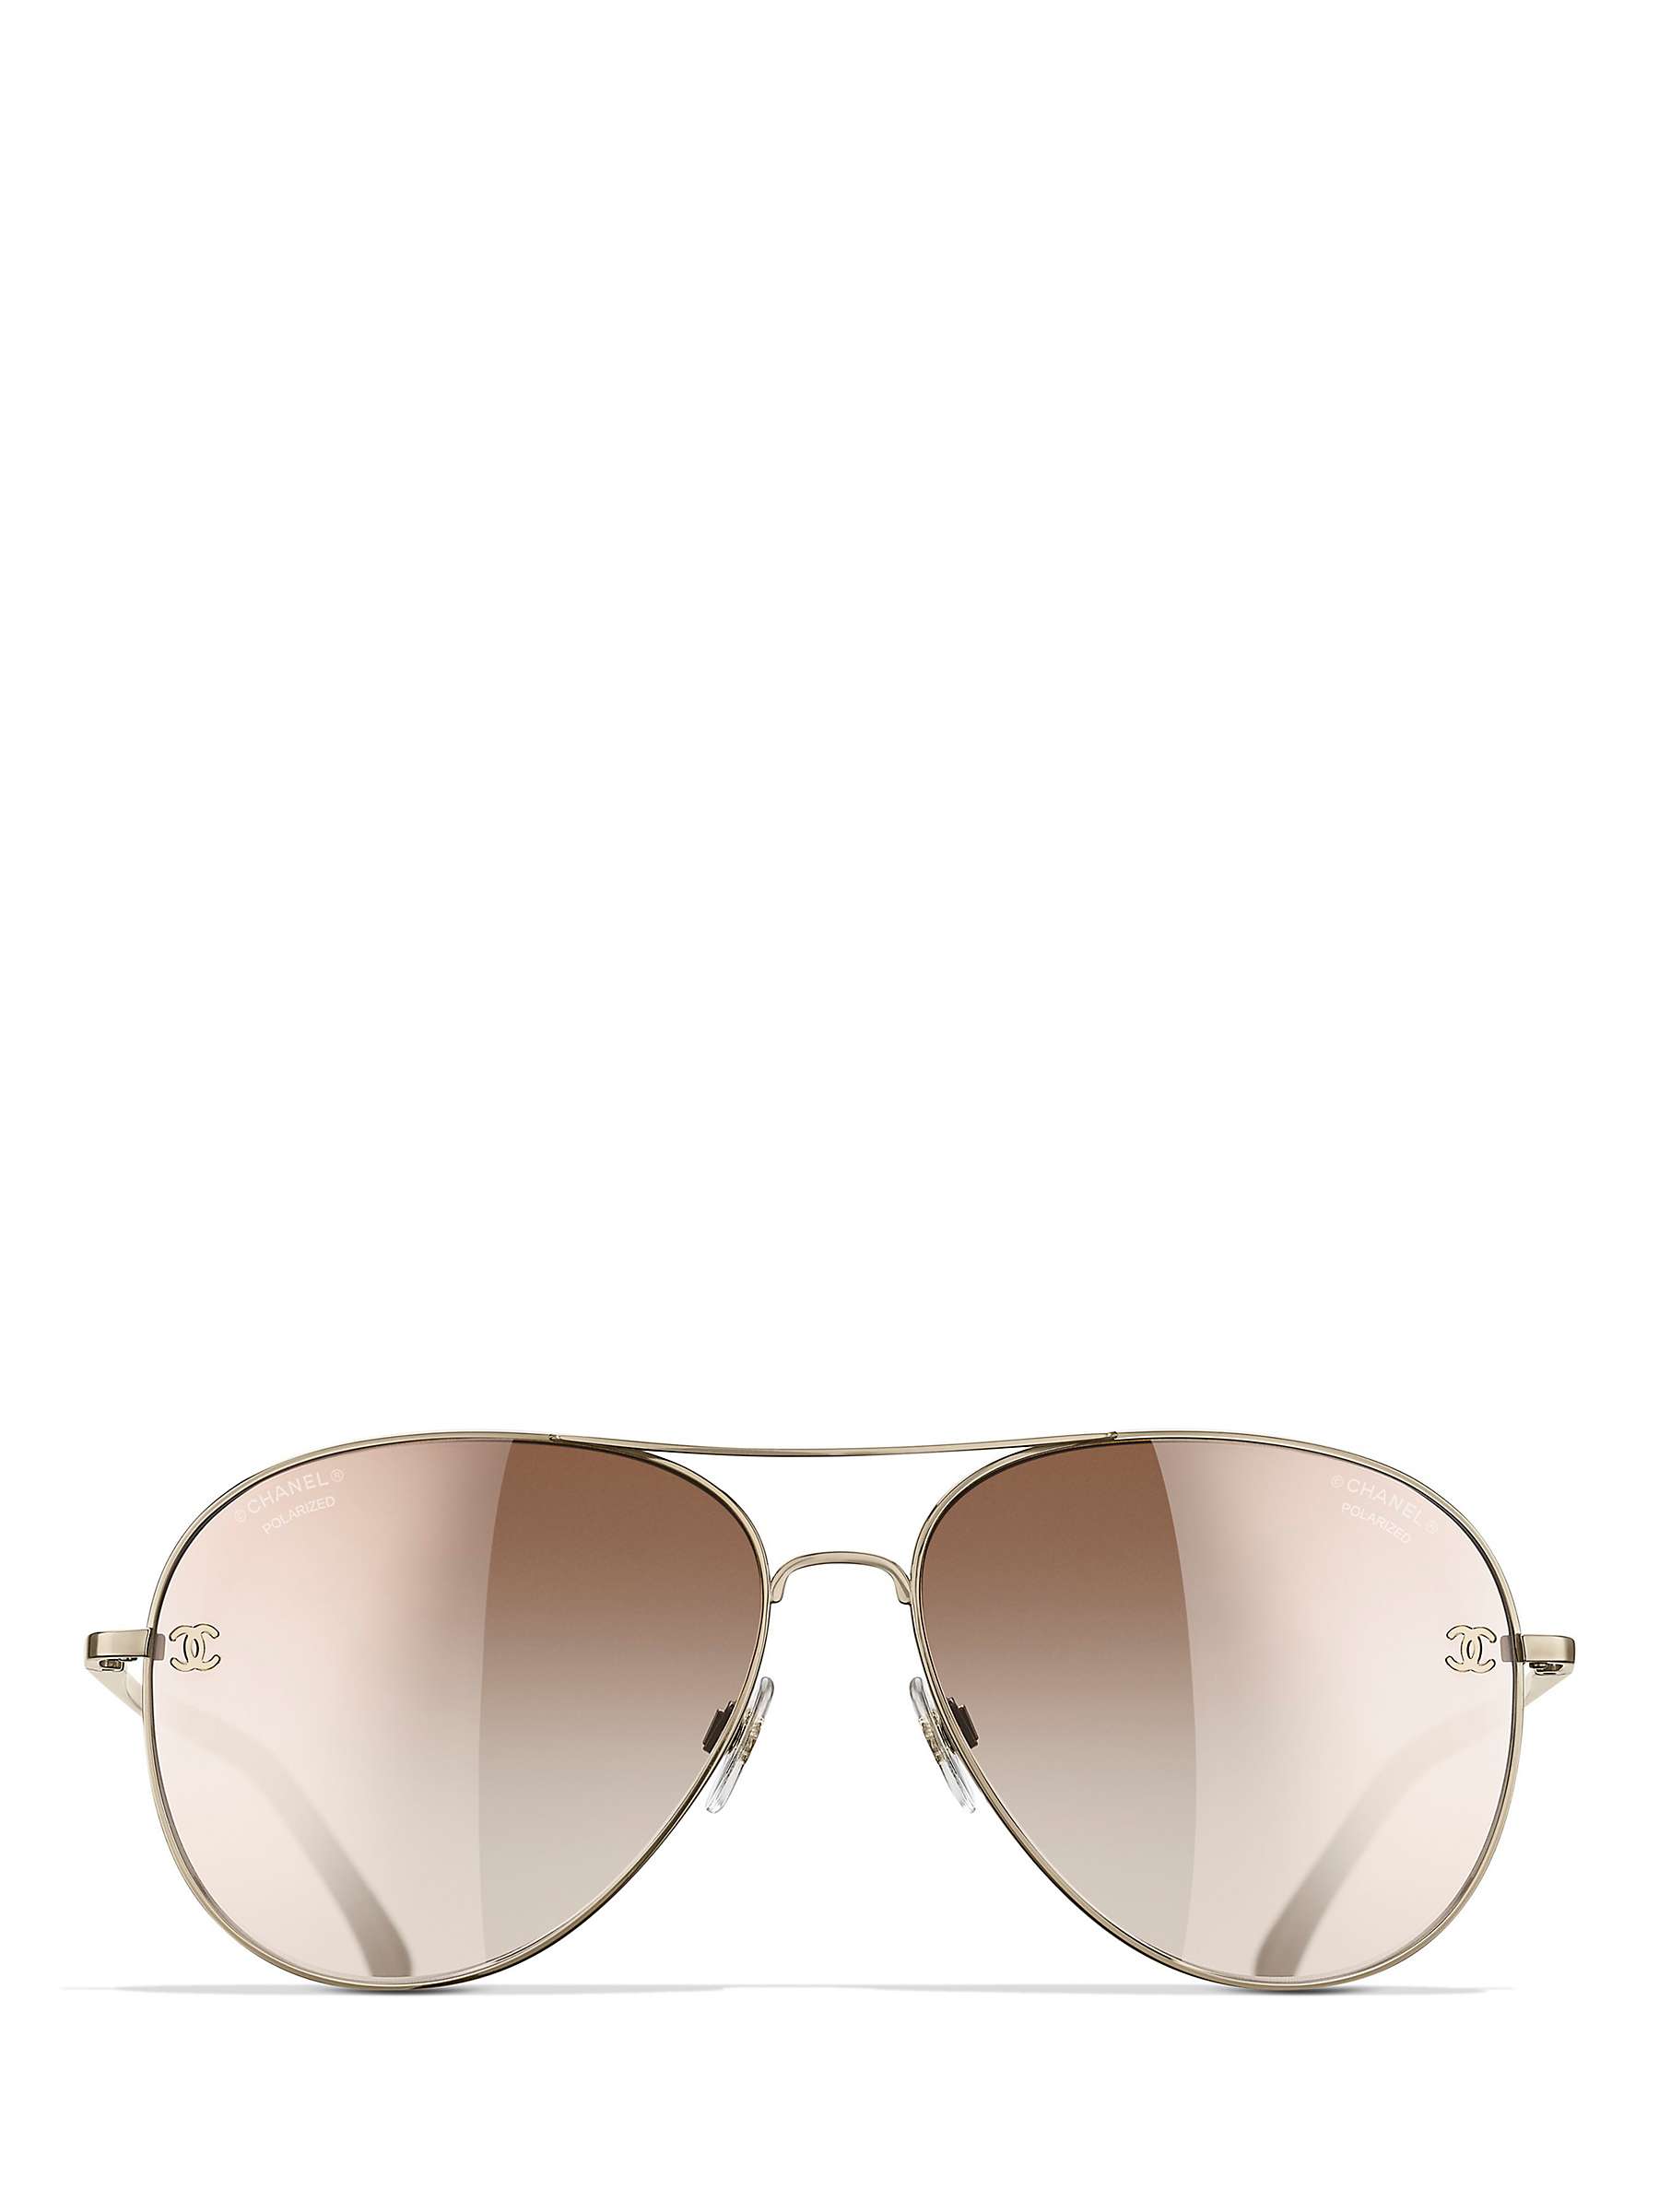 Buy CHANEL Pilot Sunglasses CH4189TQ Pale Gold/Brown Gradient Online at johnlewis.com